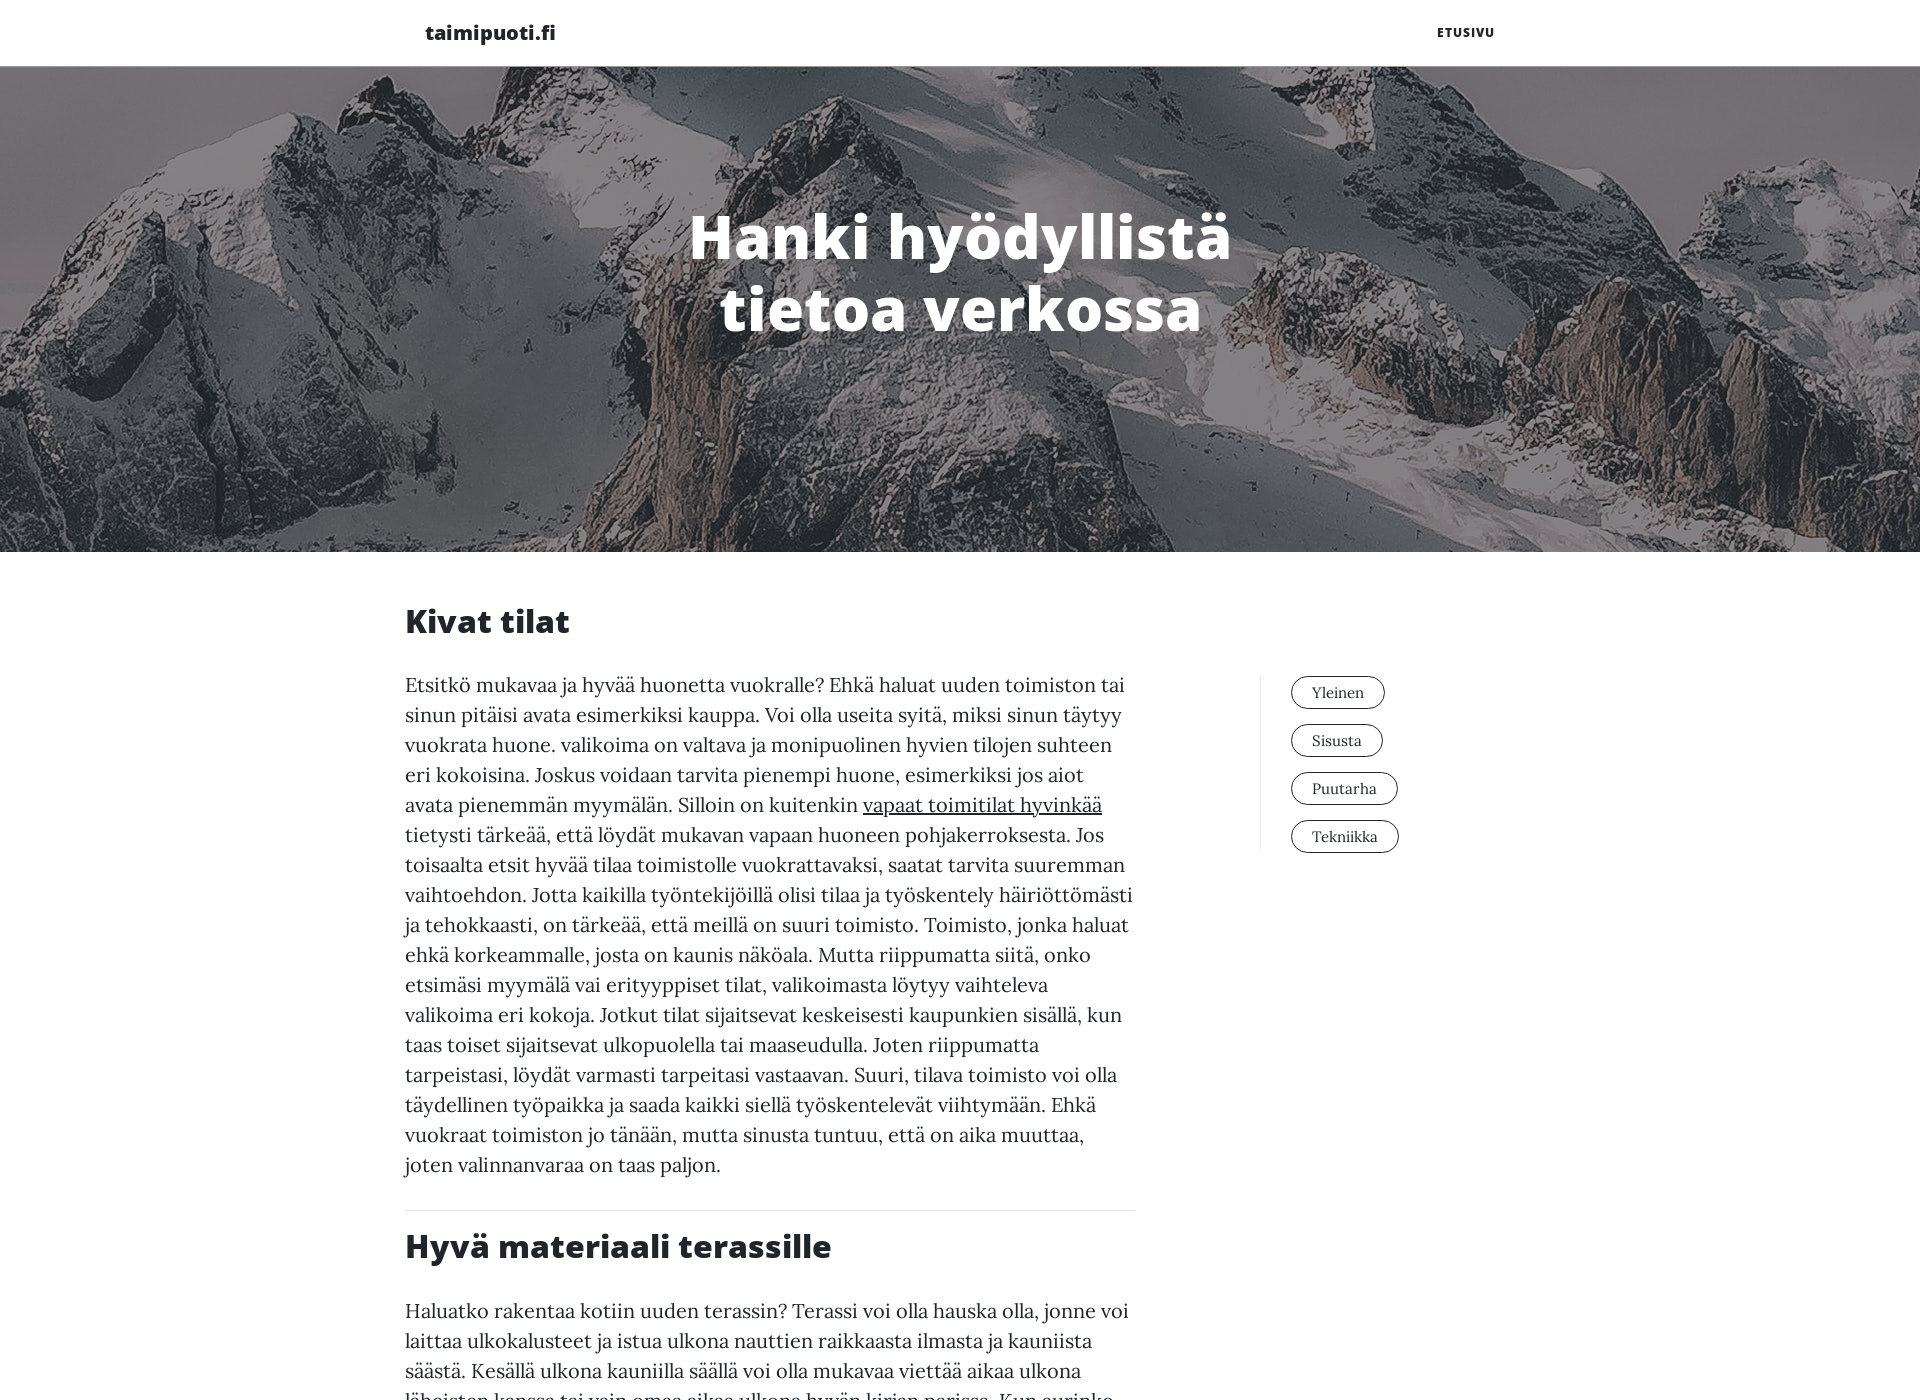 Screenshot for taimipuoti.fi